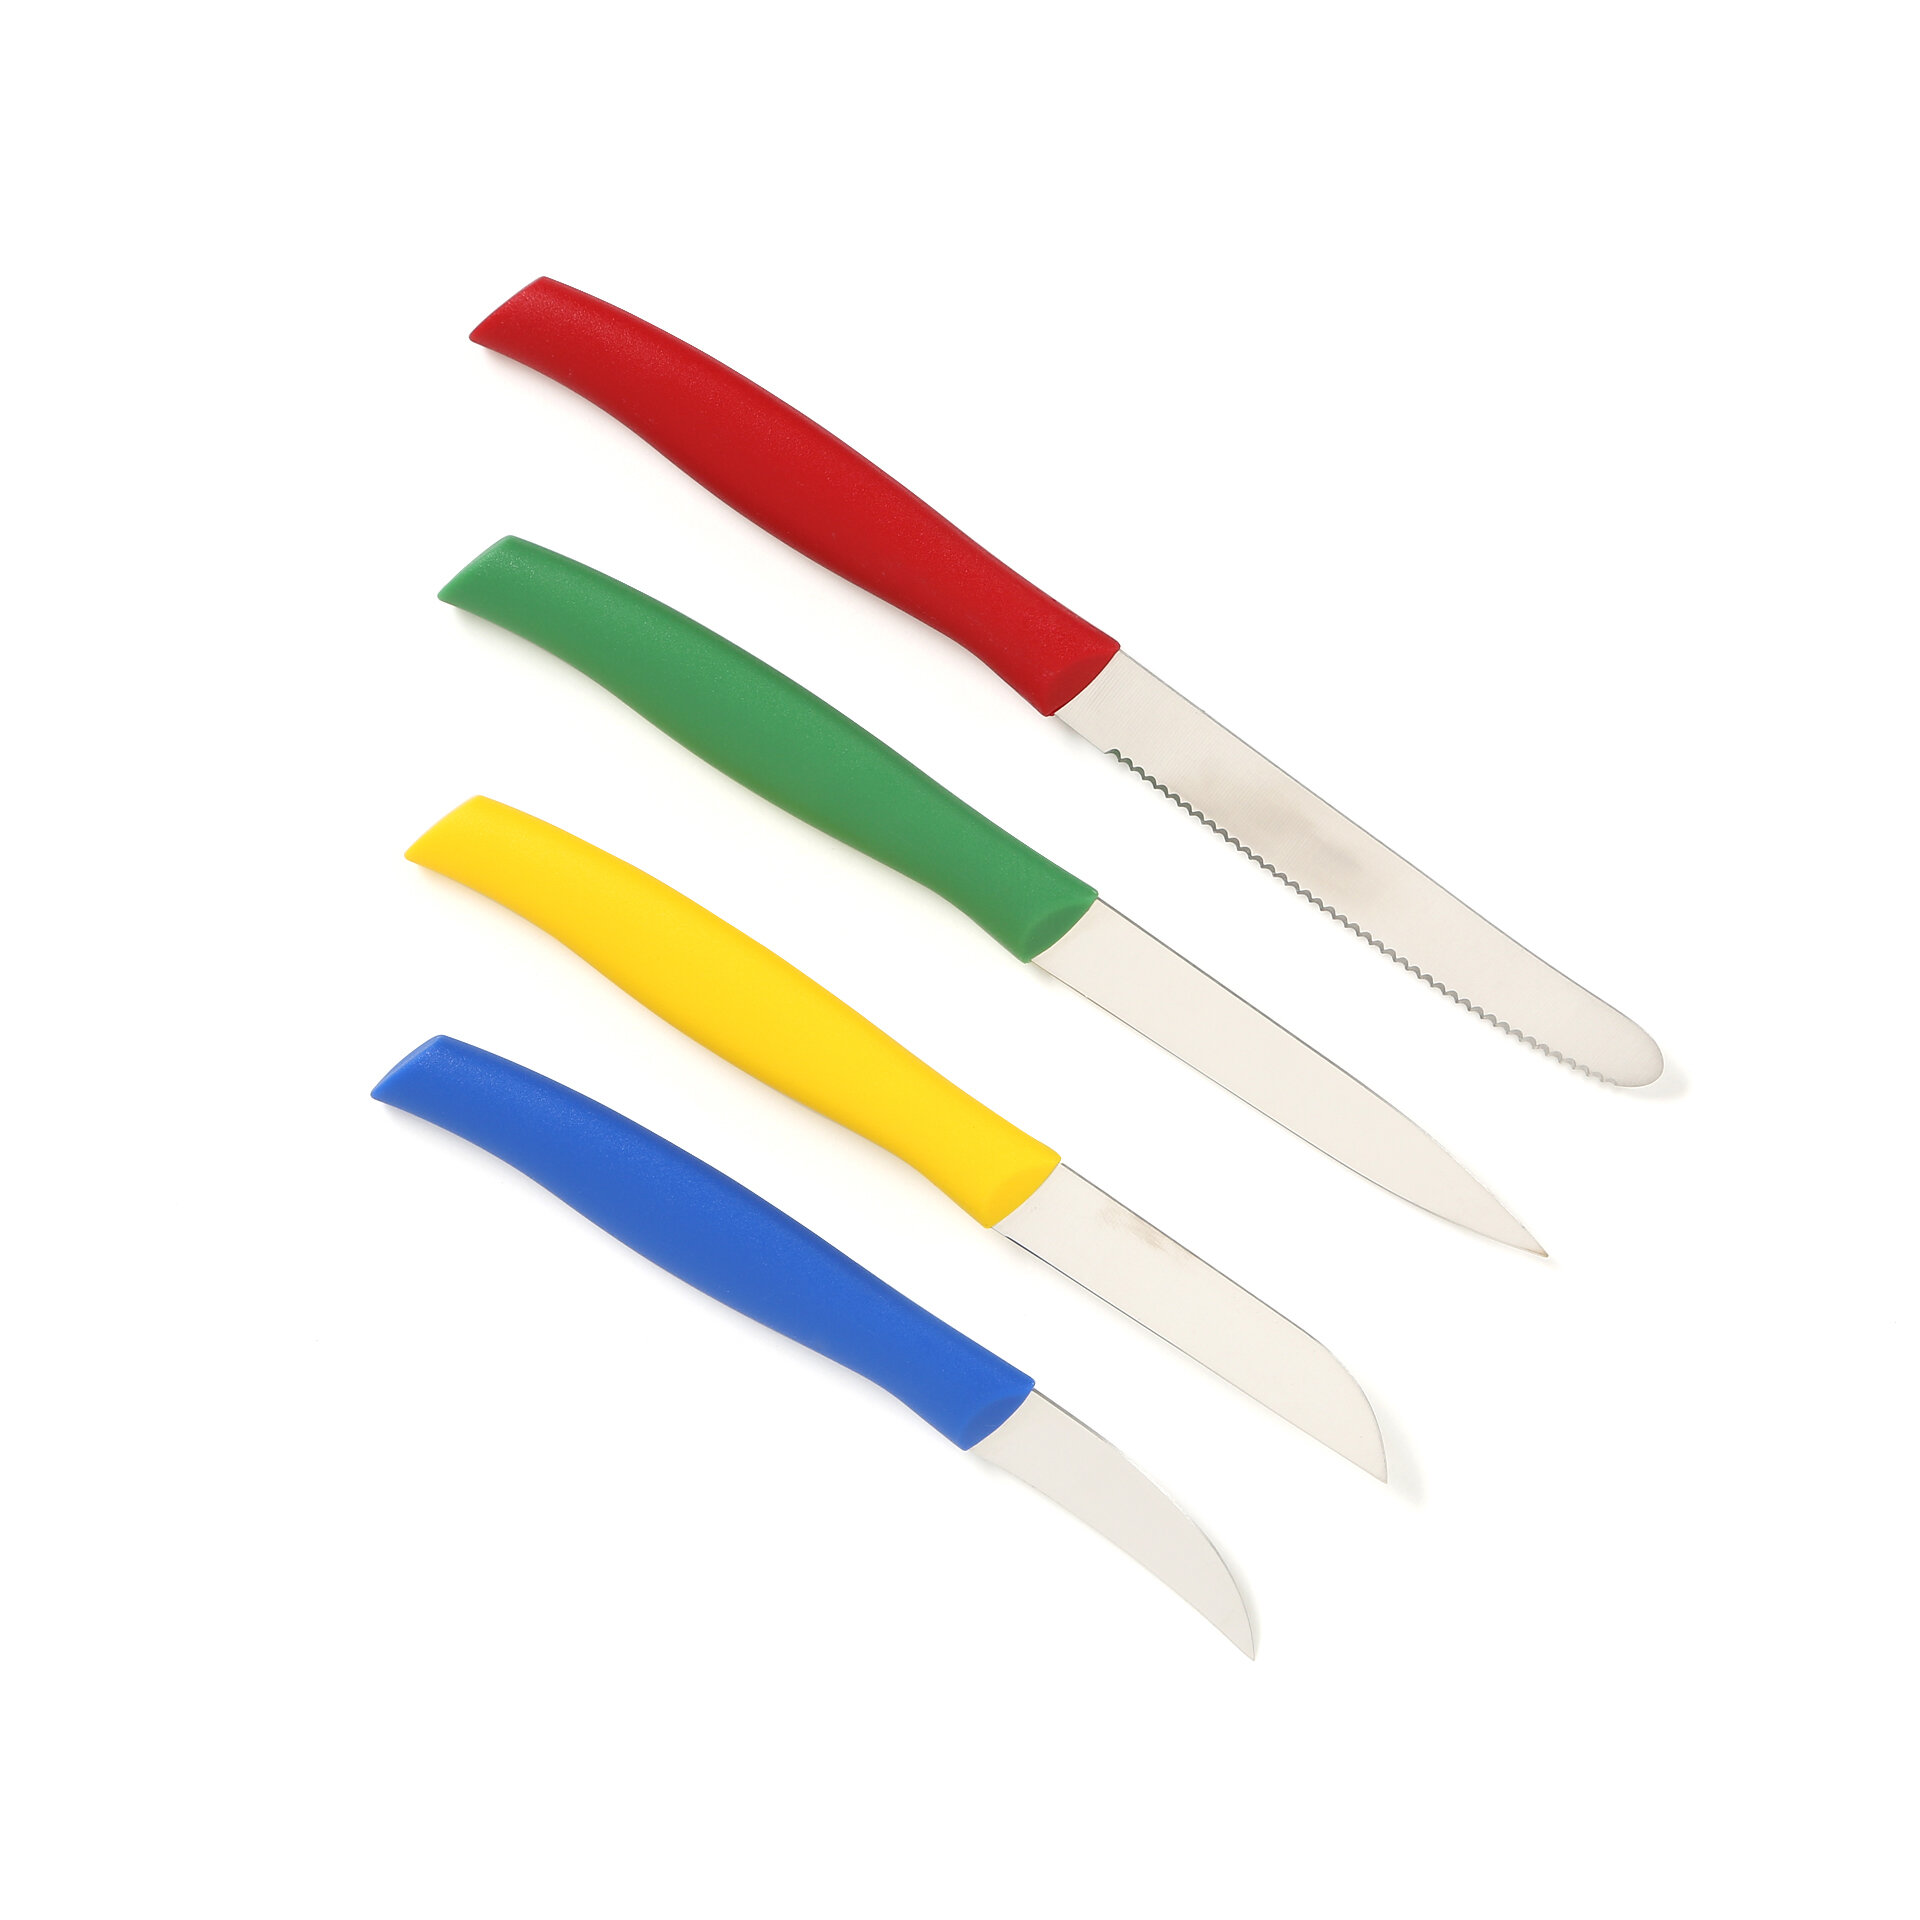 Henckels Paring Knives 4-pc, Paring Knife Set - Multi-Colored